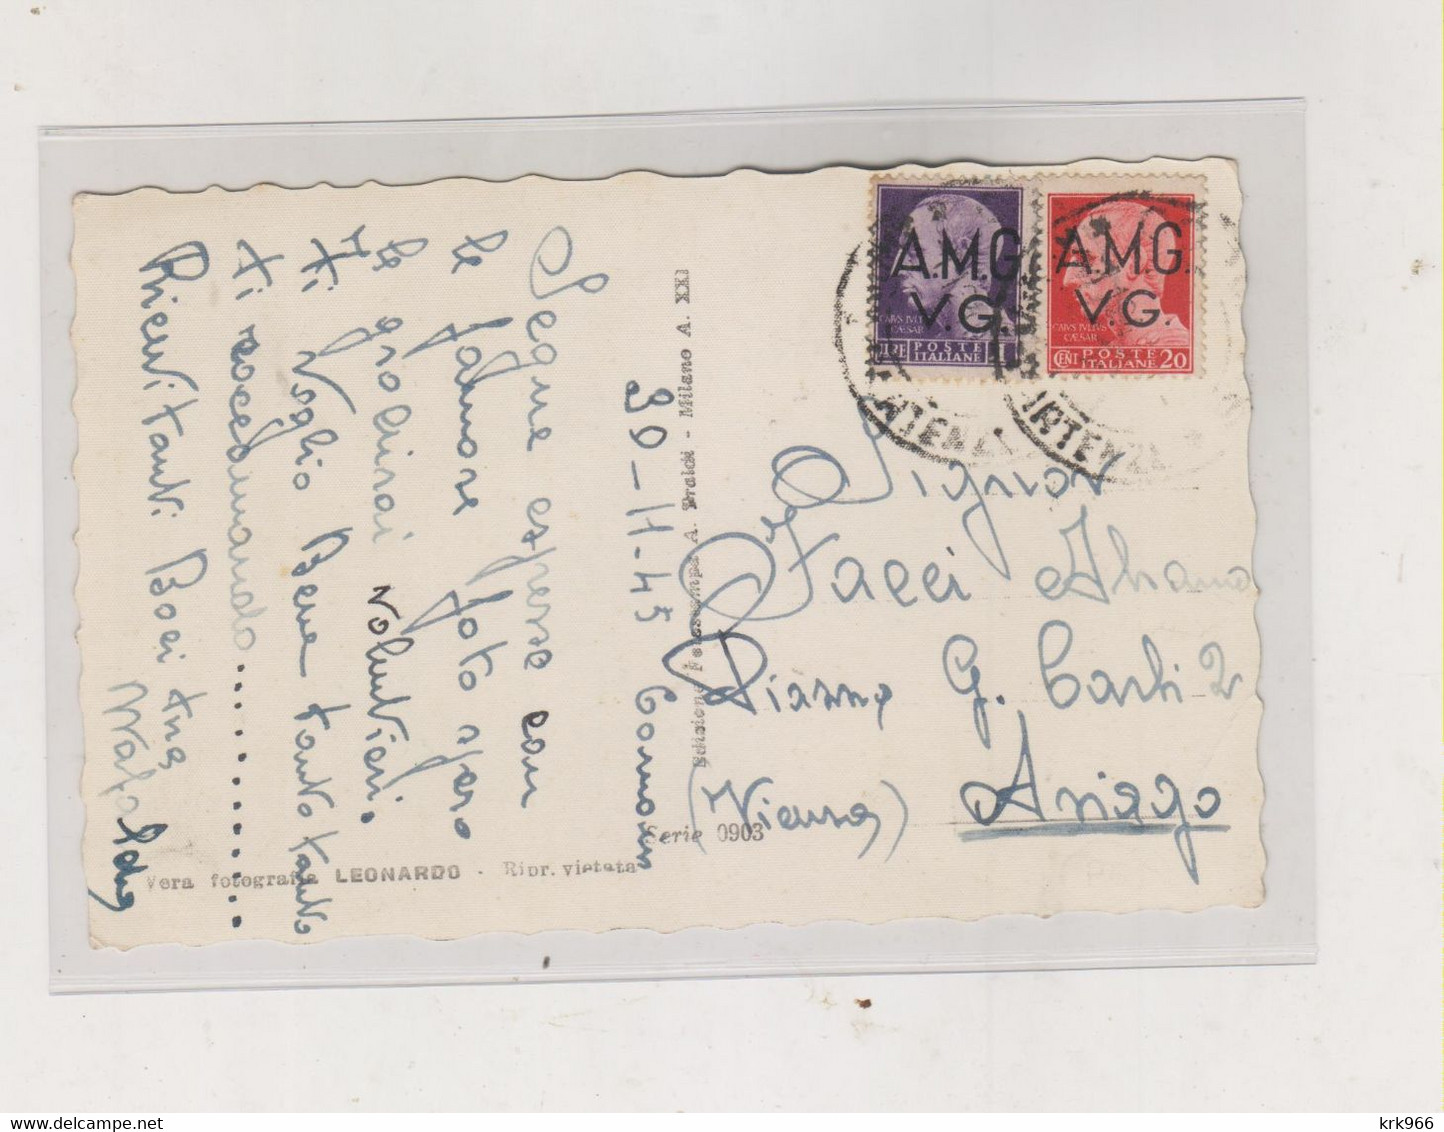 ITALY TRIESTE A 1945  AMG-VG Nice  Postcard - Poststempel